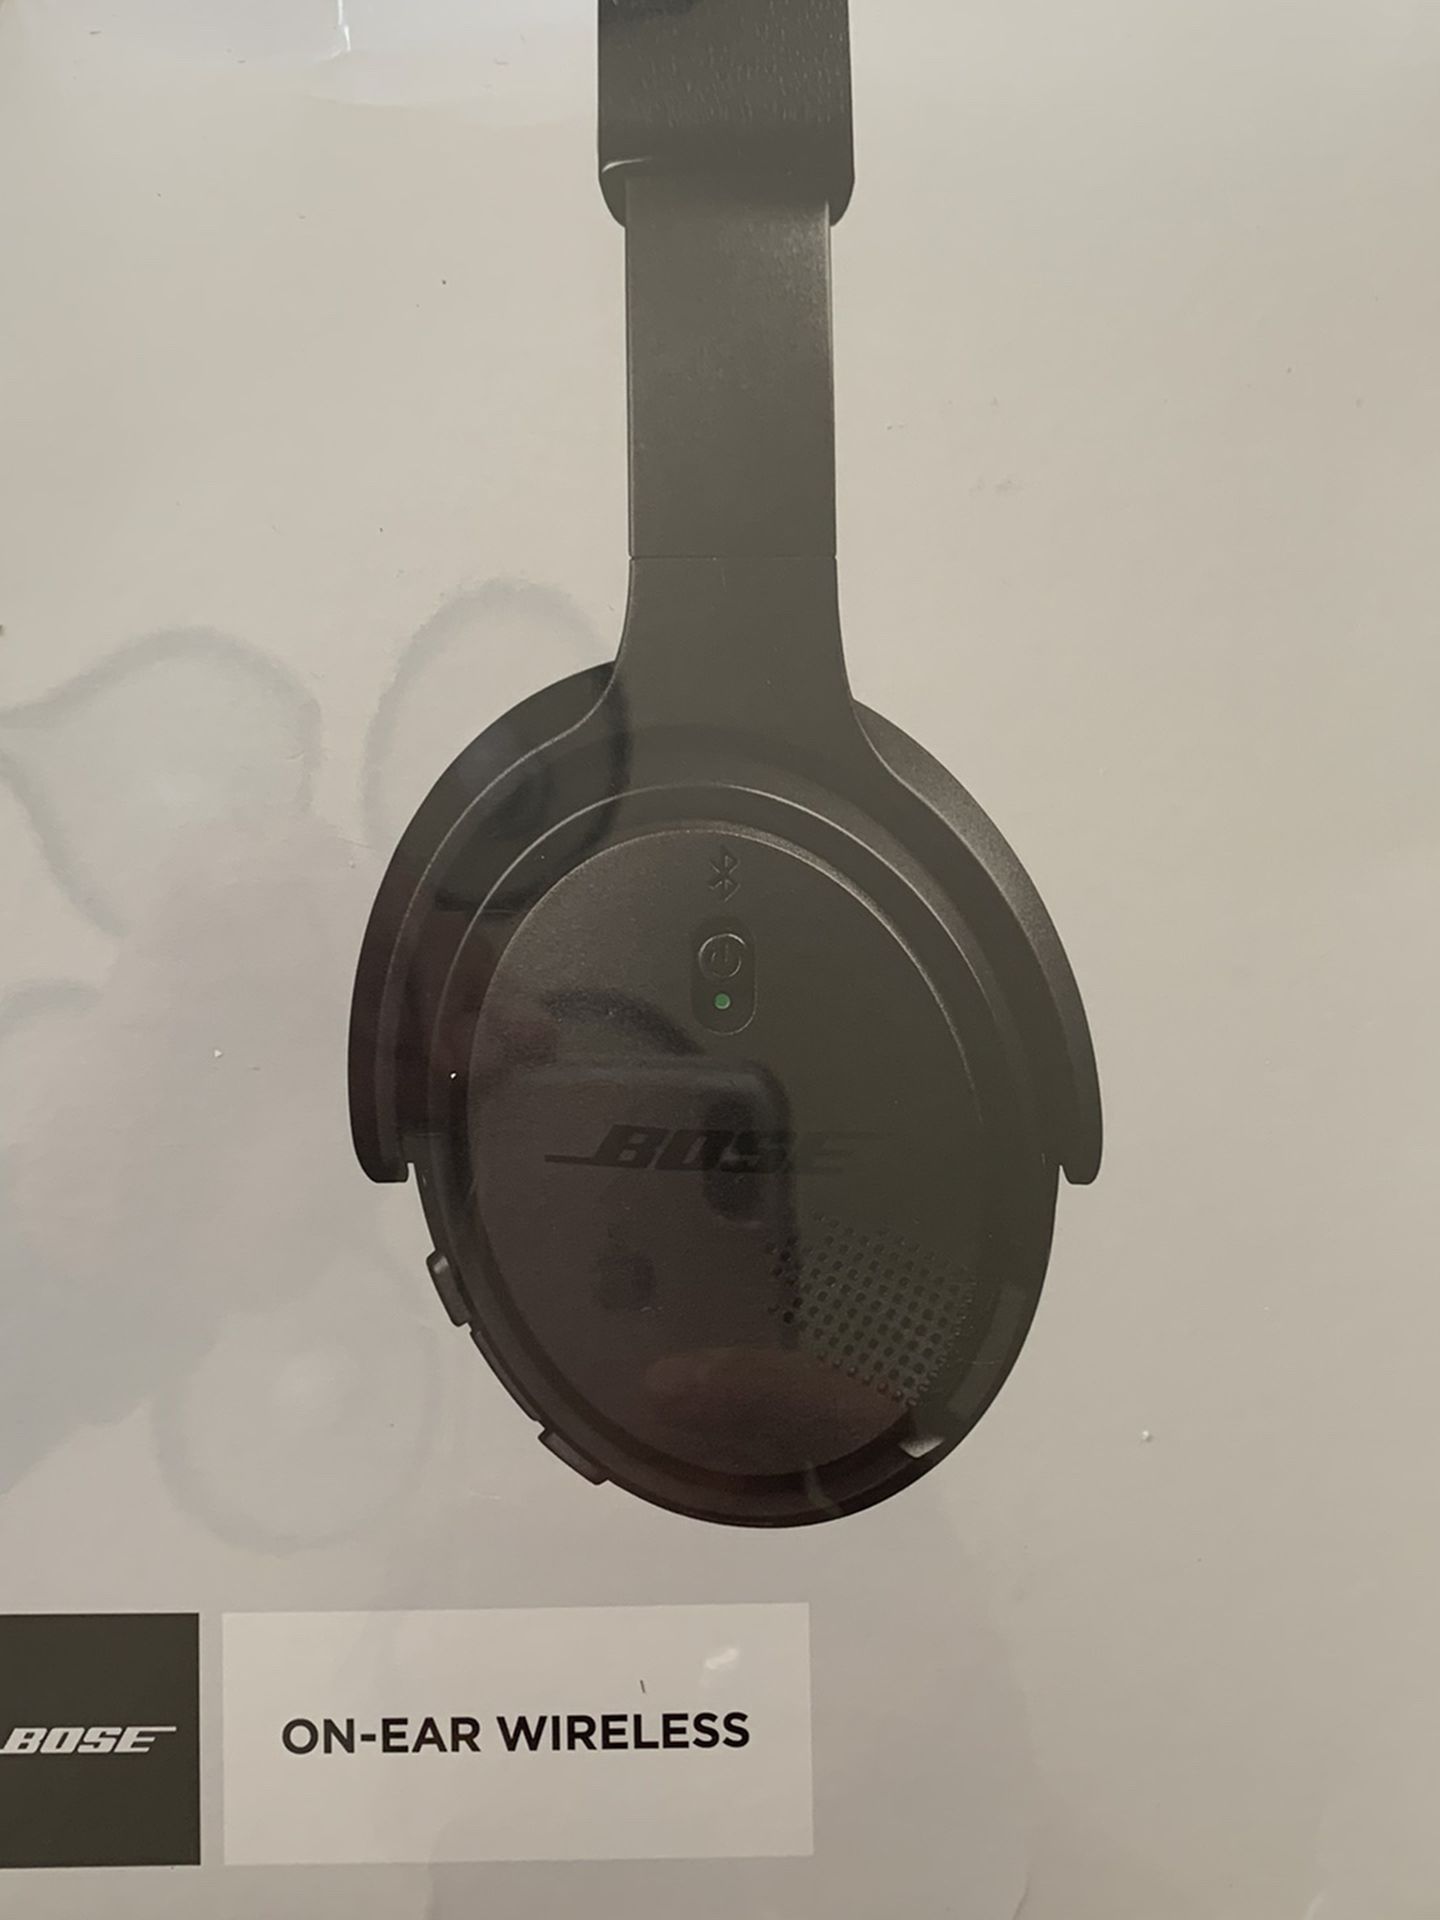 Bose on-ear wireless headphones New. Sealed.